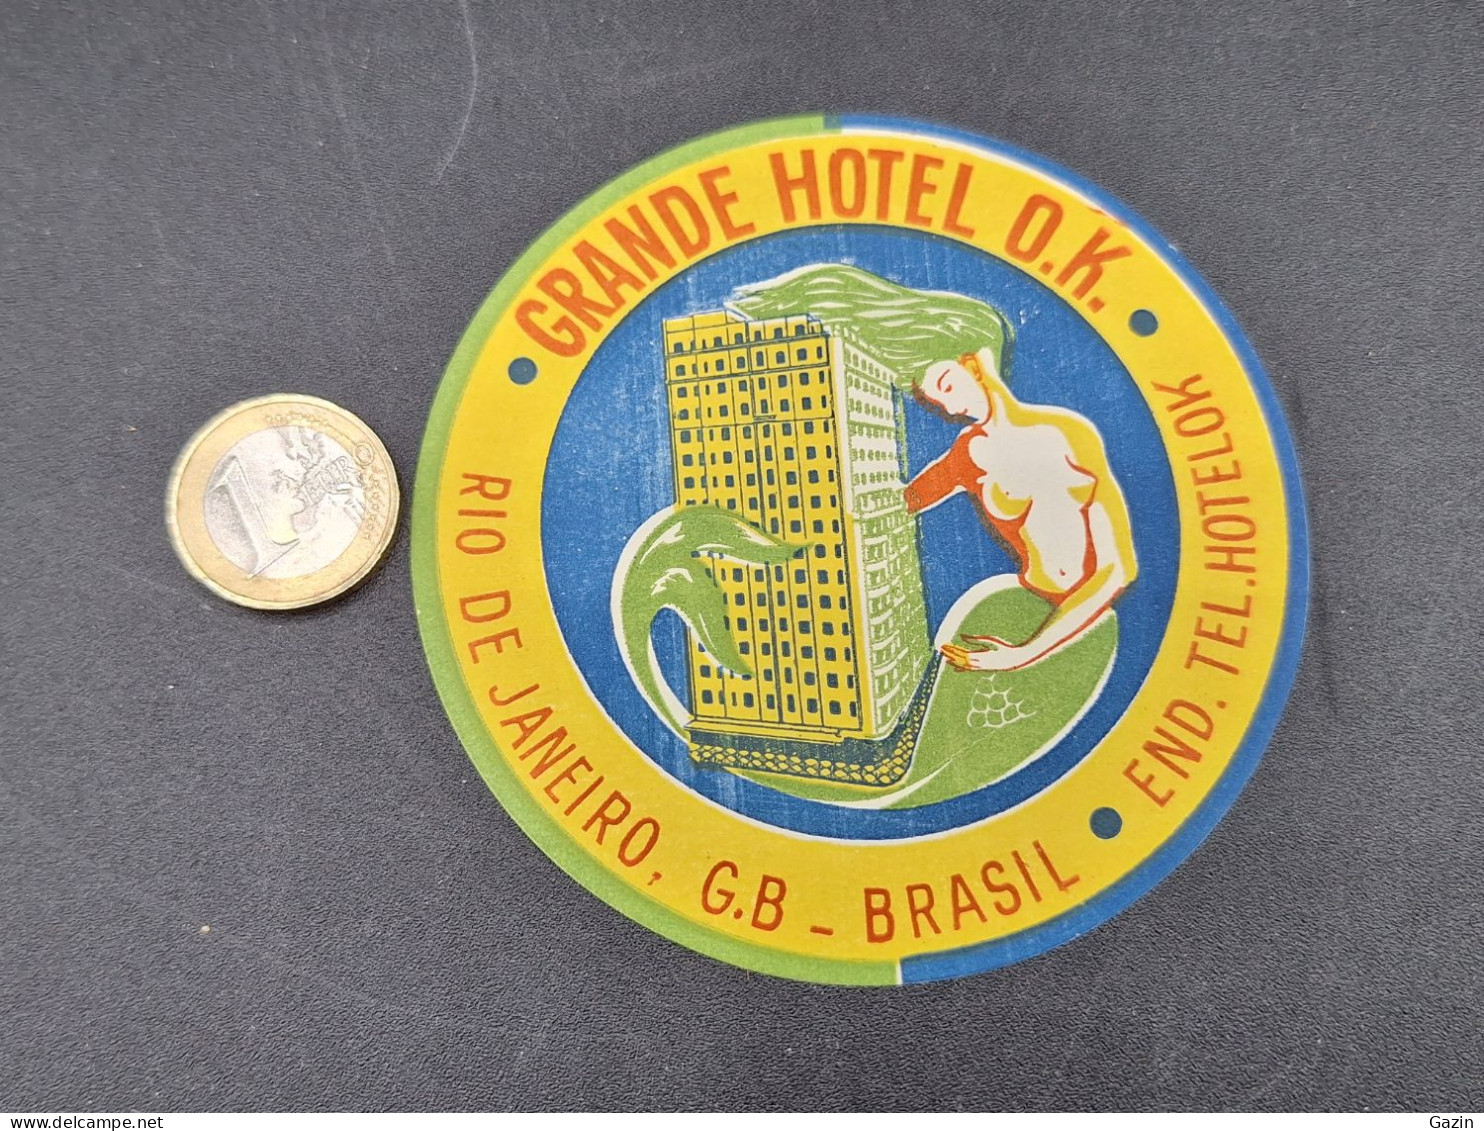 C7/3 - Grande Hotel O.K. * Rio De Janeiro * Brasil *  Luggage Lable * Rótulo * Etiqueta - Hotel Labels